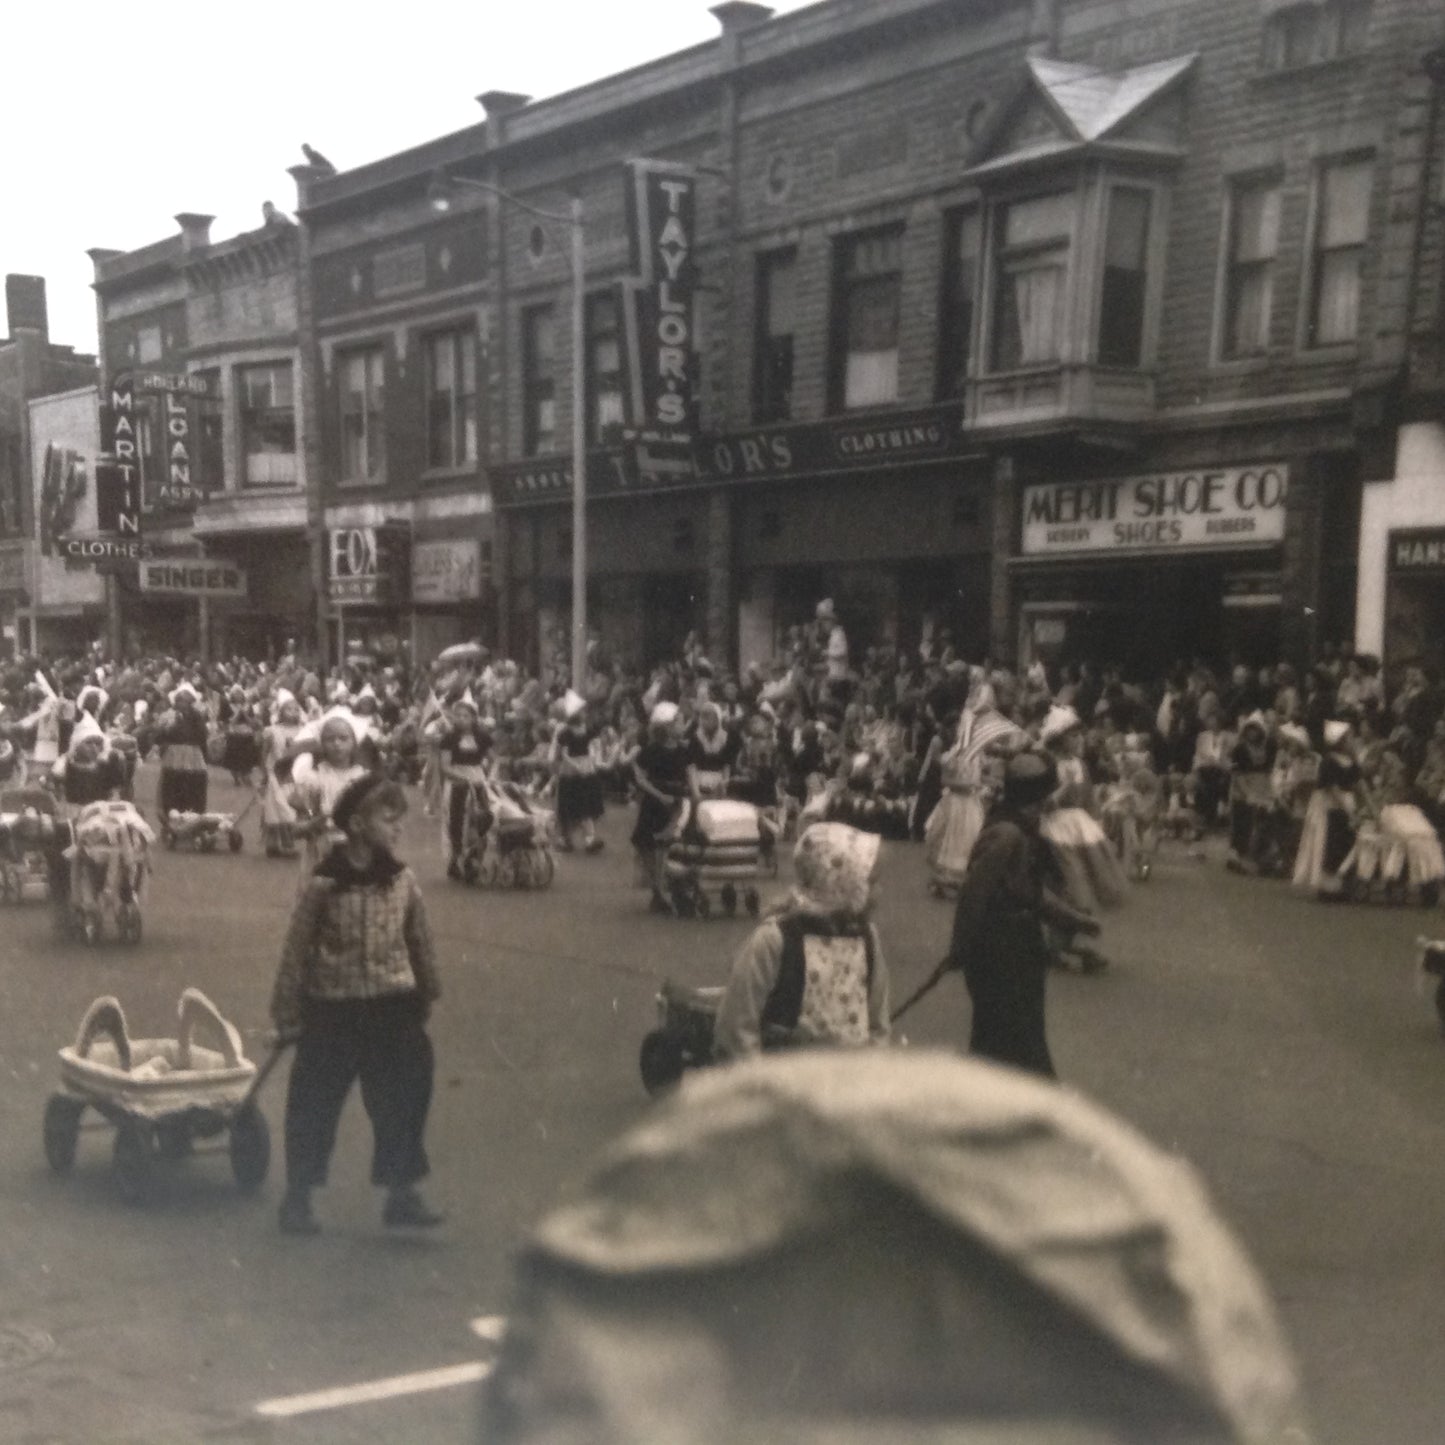 Vintage Mid Century B&W Photo Holland Michigan Tulip Festival Parade of Strollers